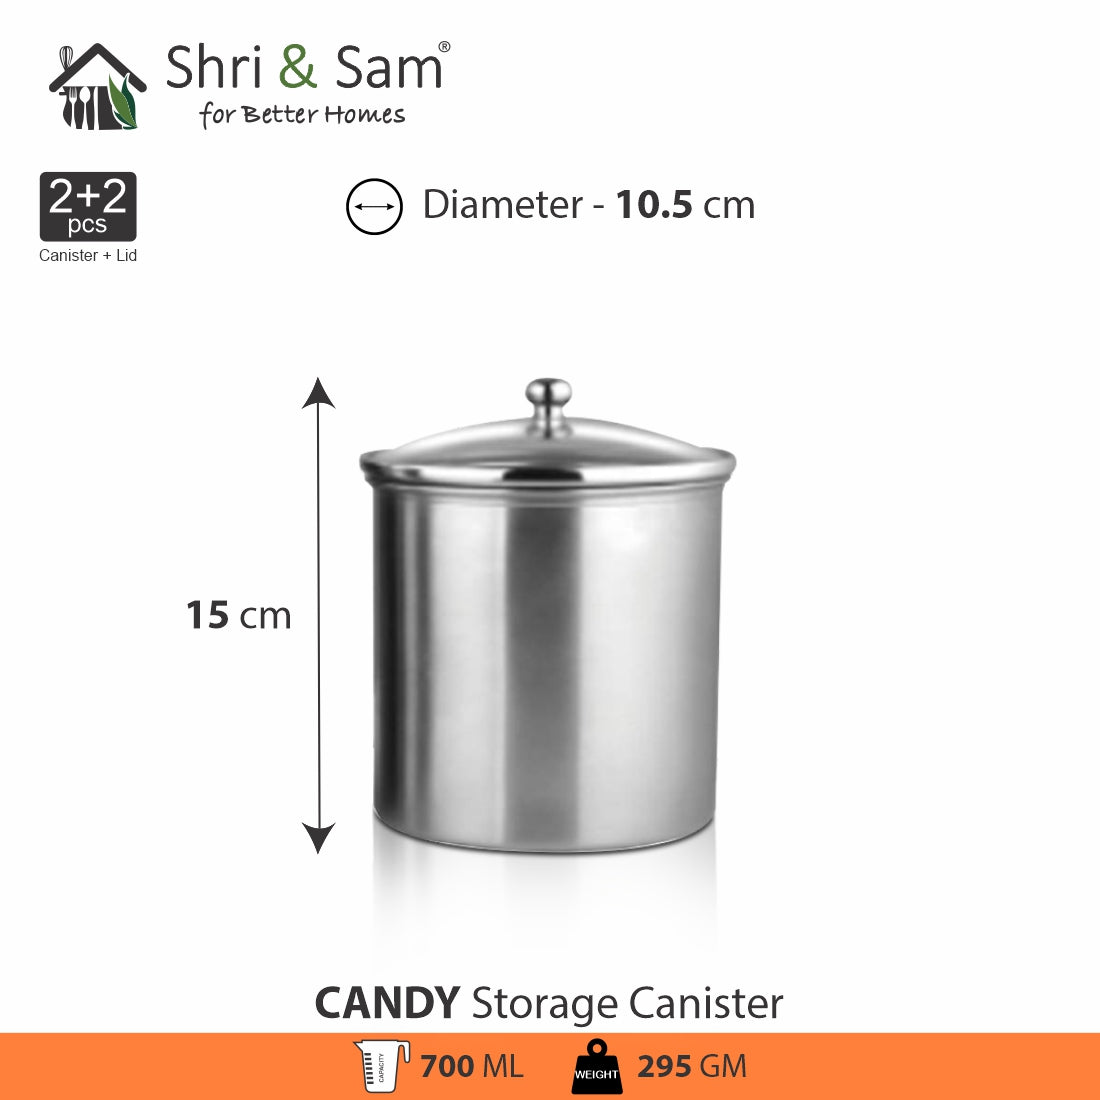 Jagdamba Cutlery Pvt Ltd. Serveware 2 PCS Candy Storage Canister with air tight glass lid - 700 ML